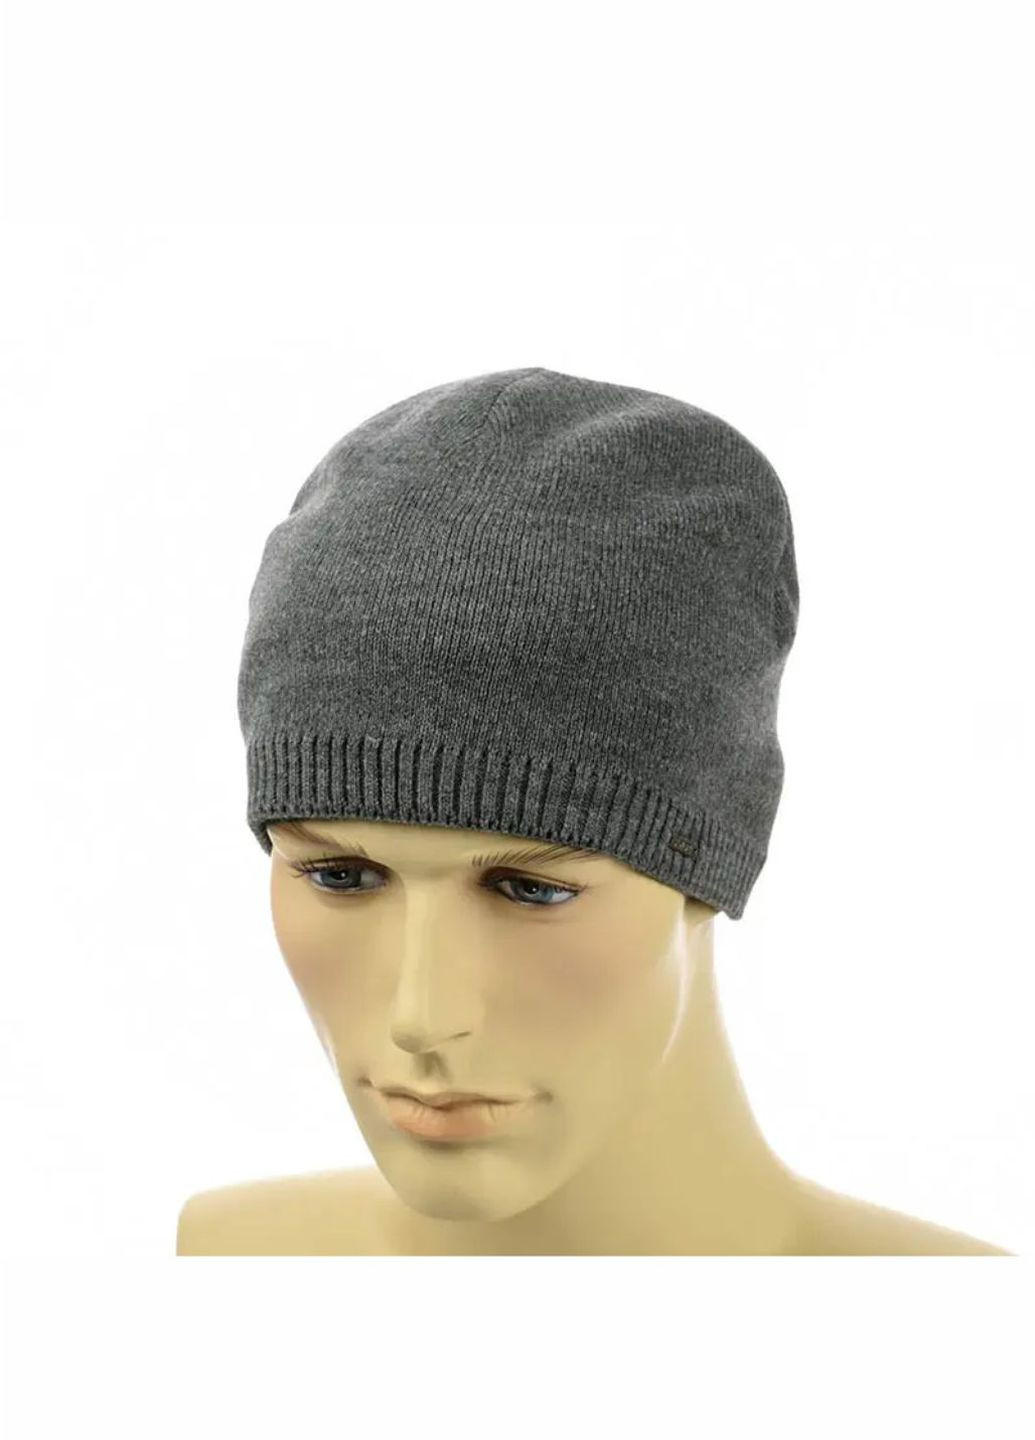 Мужская зимняя шапка на флисе Interlok No Brand чоловіча шапка на флісі (271838177)